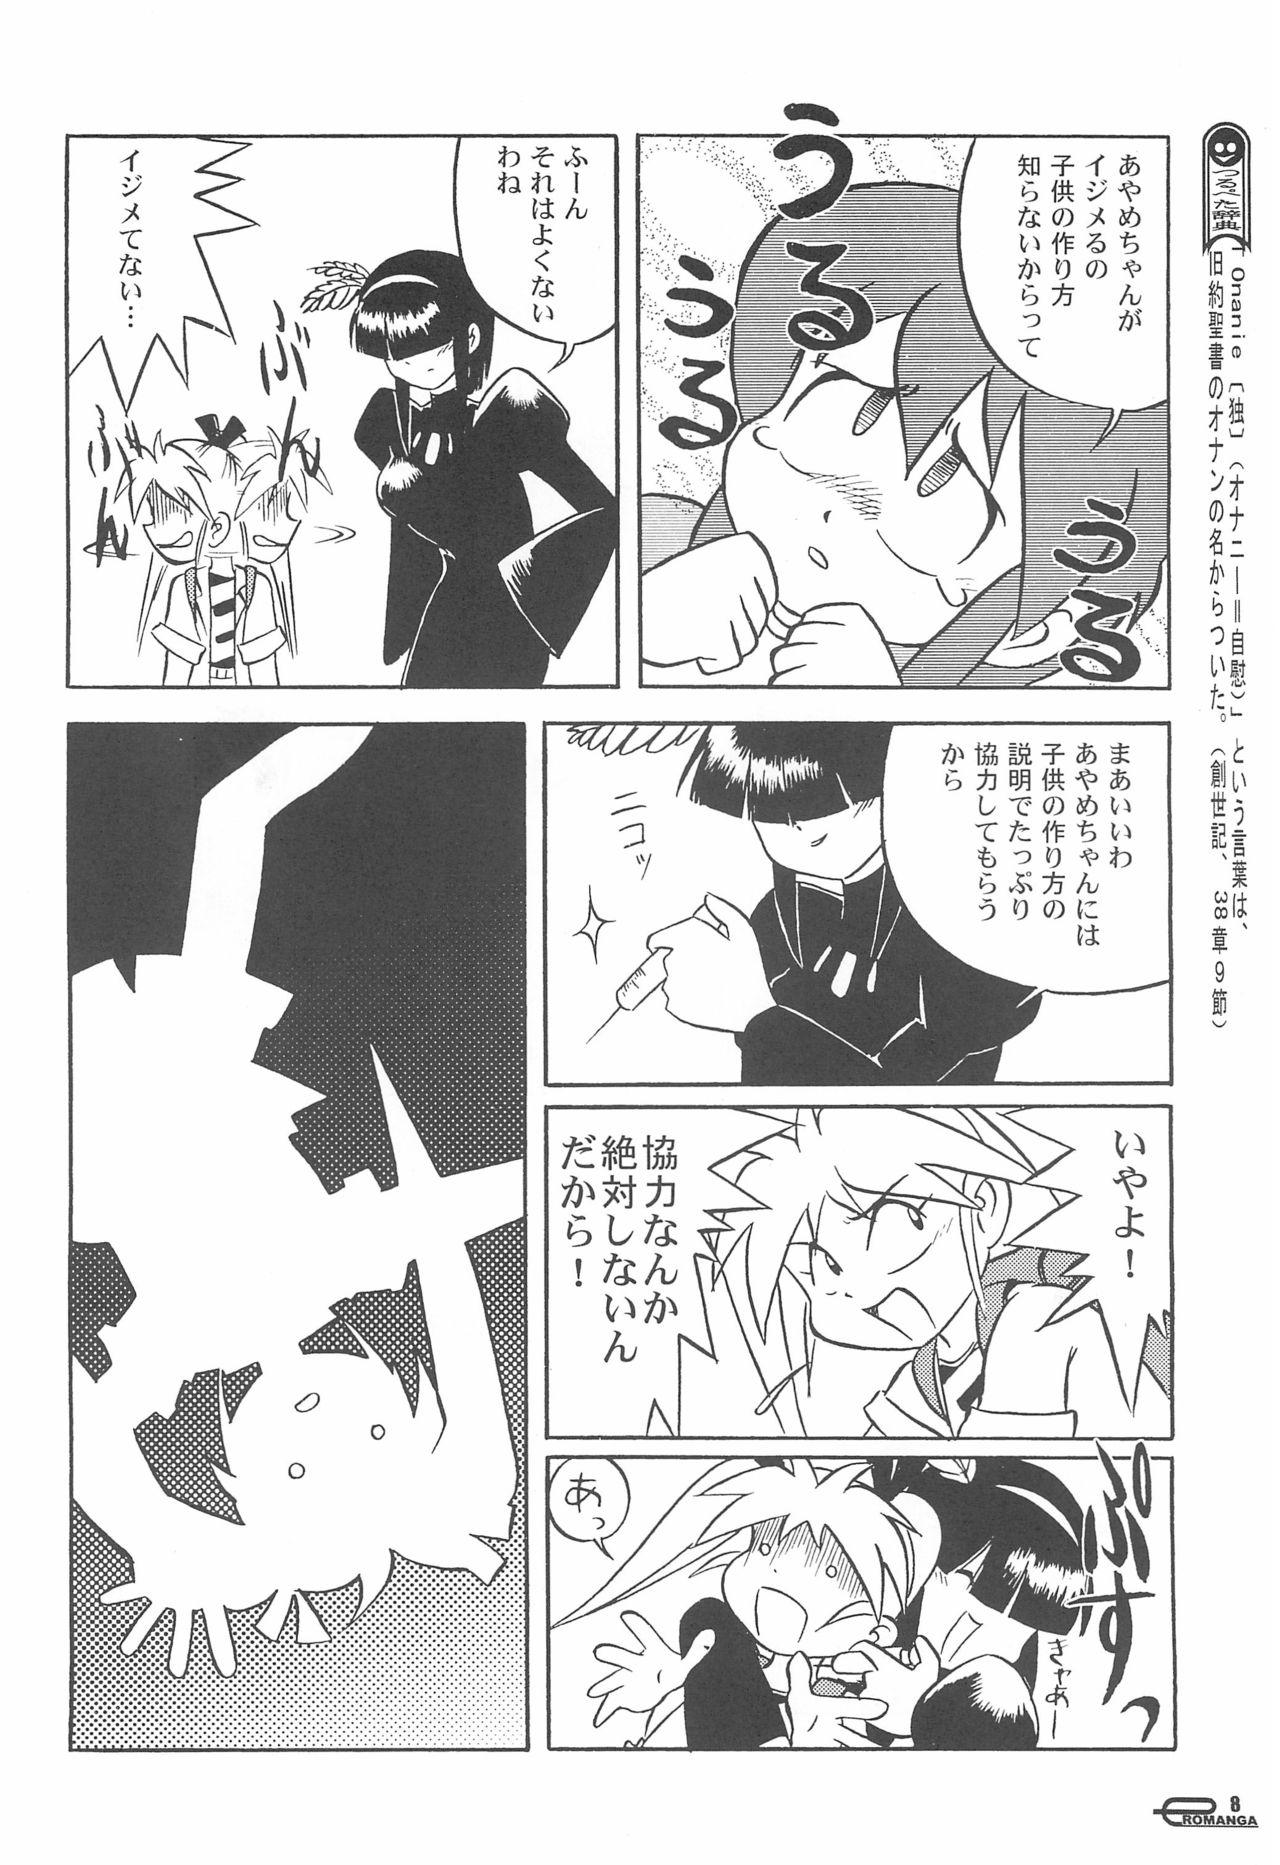 Kink Manga Science Onna no ko no Himitsu - Manga science Horny - Page 10